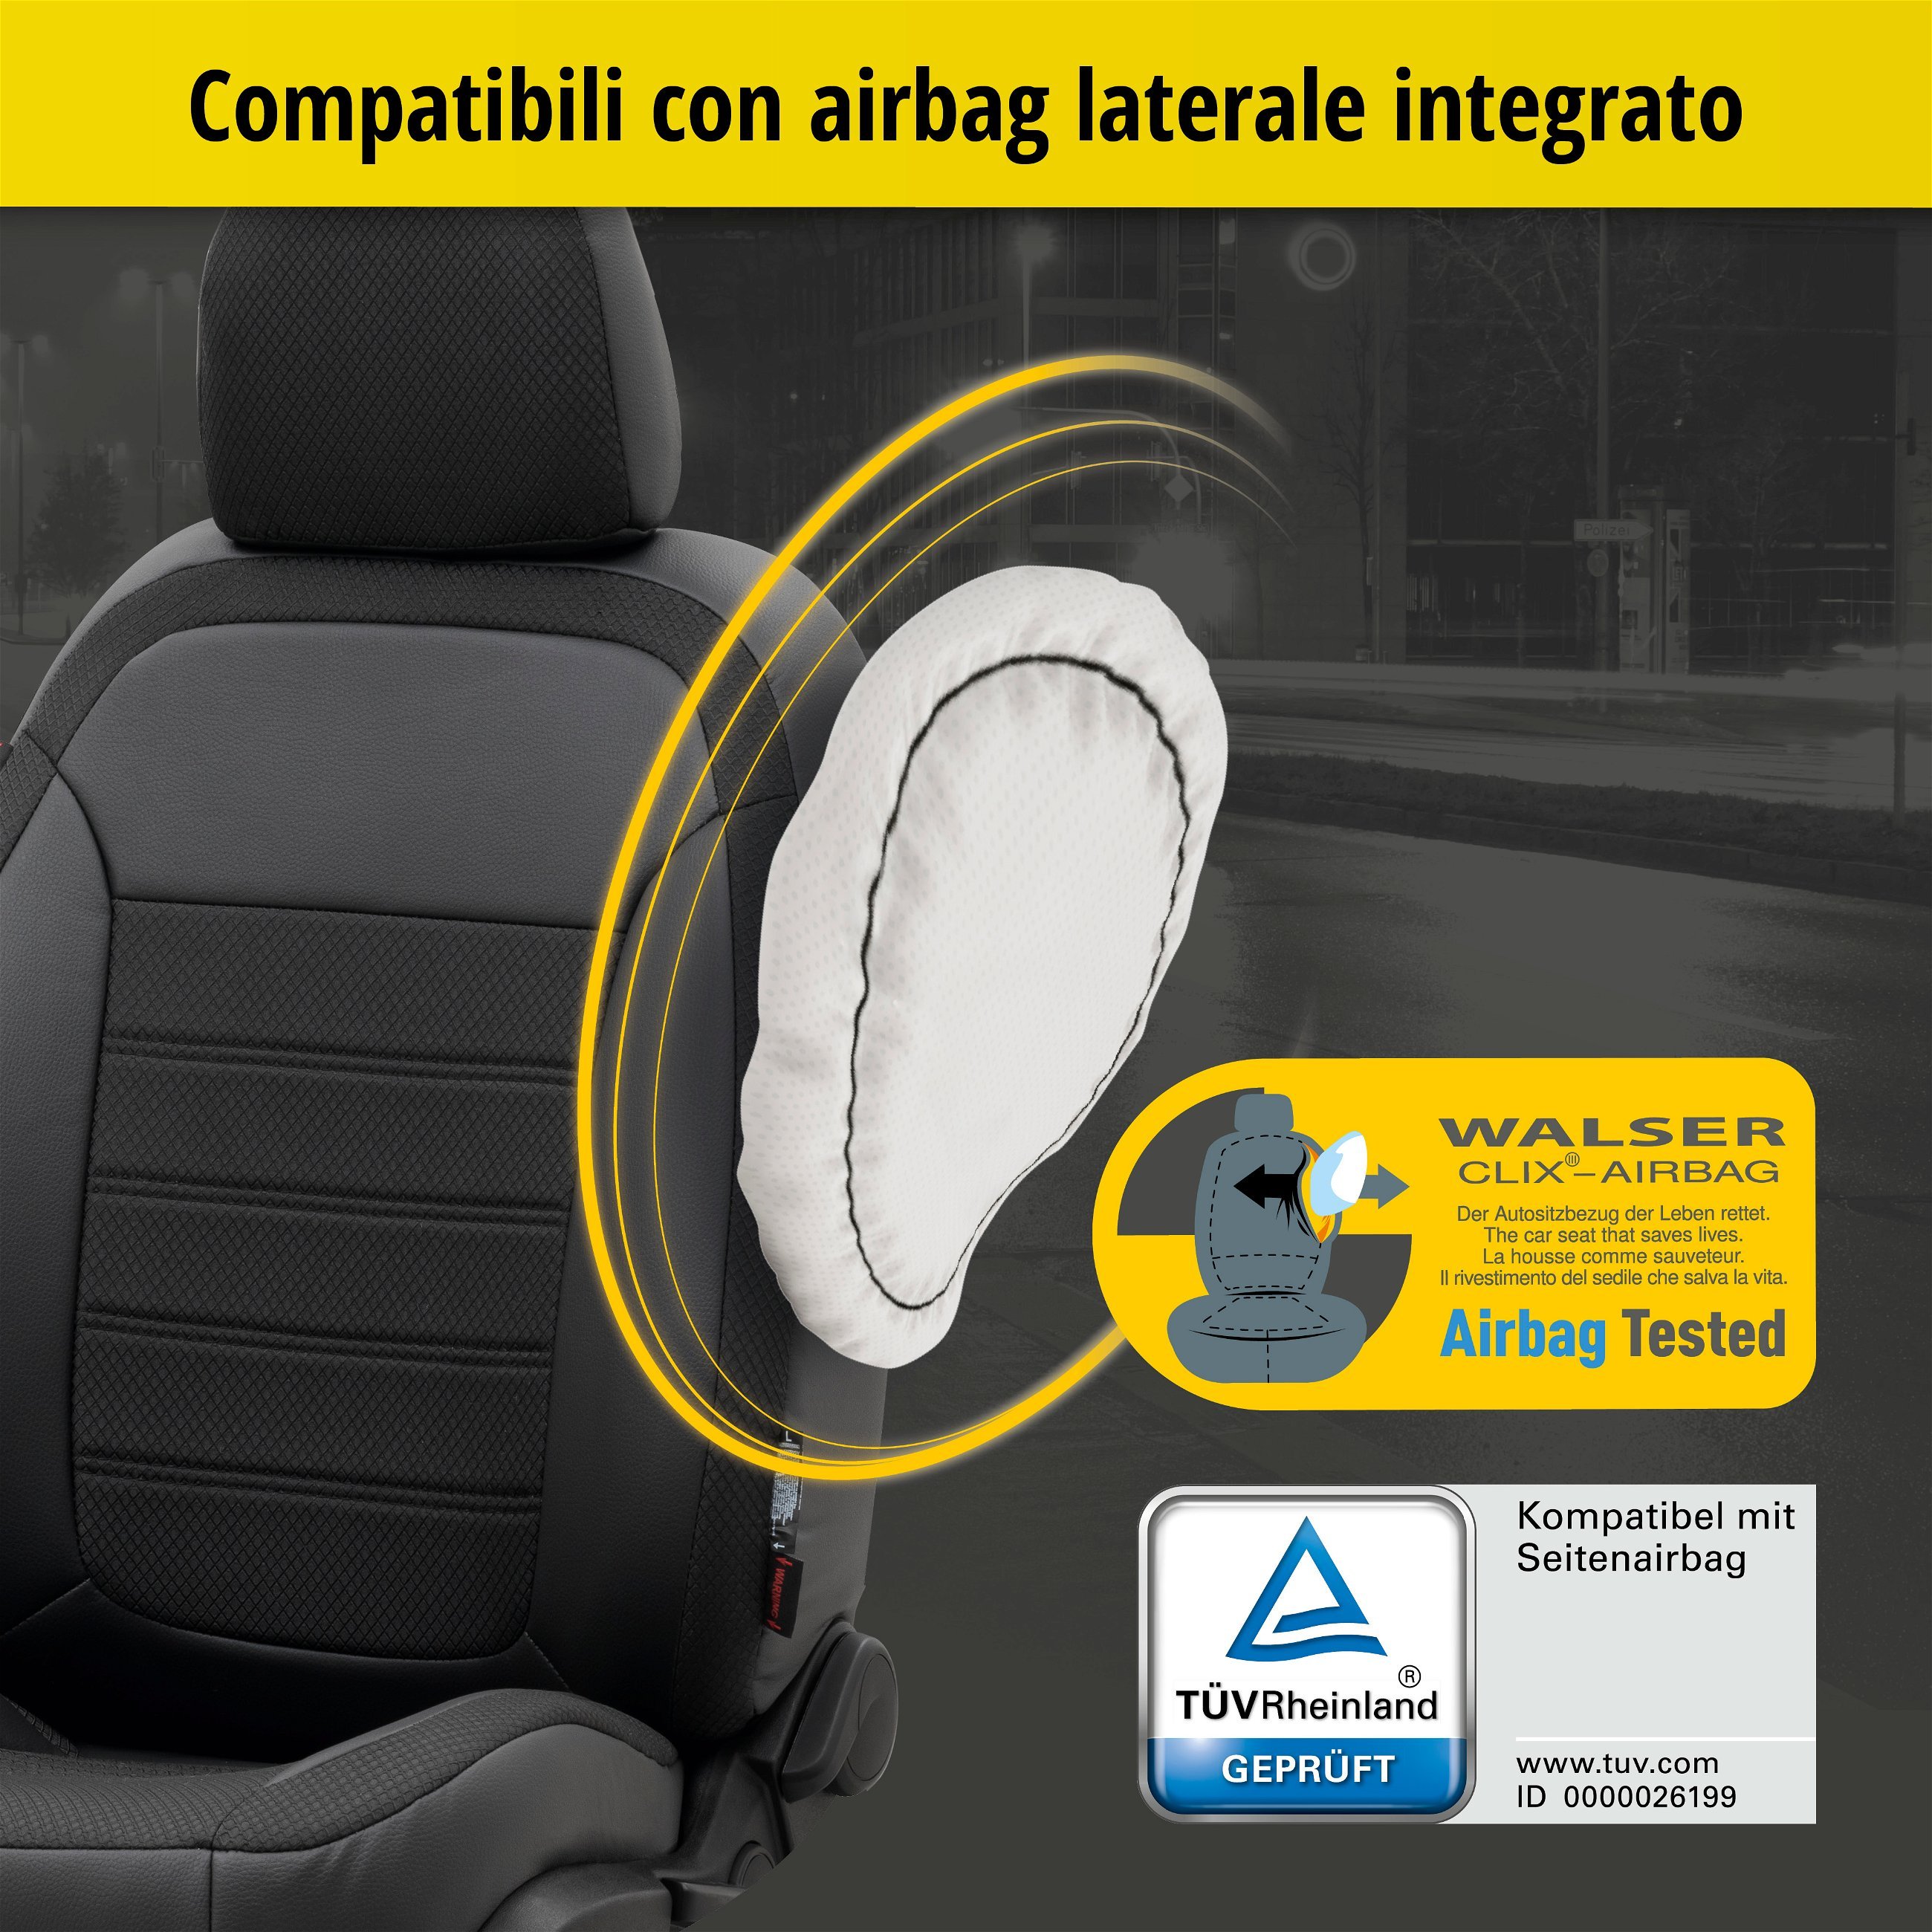 Coprisedili Aversa per Nissan Qashqai II 11/2013-Oggi, 2 coprisedili per sedili normali